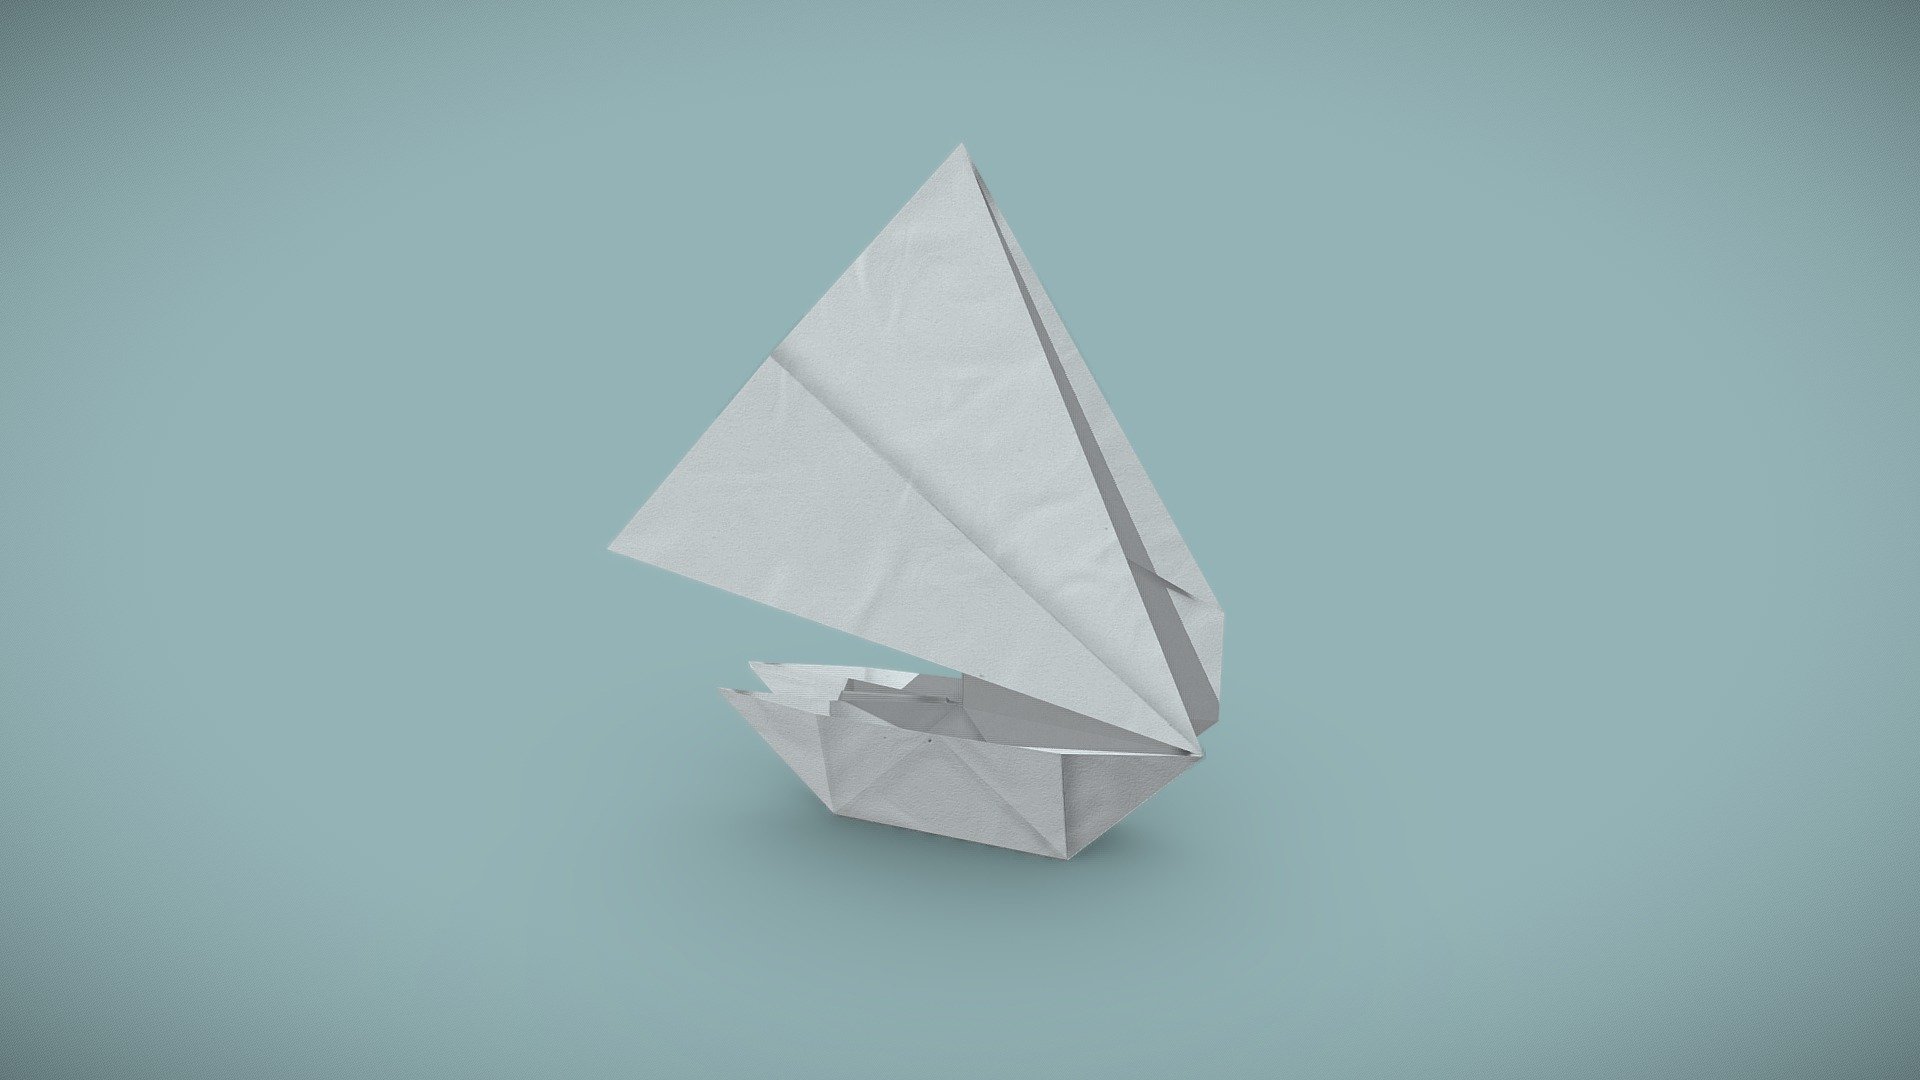 Catamaran Origami lowpoly model.
Additional file format OBJ, FBX, DAE, BLEND, LXO, OBJ - Origami boat - Buy Royalty Free 3D model by boriscargo 3d model